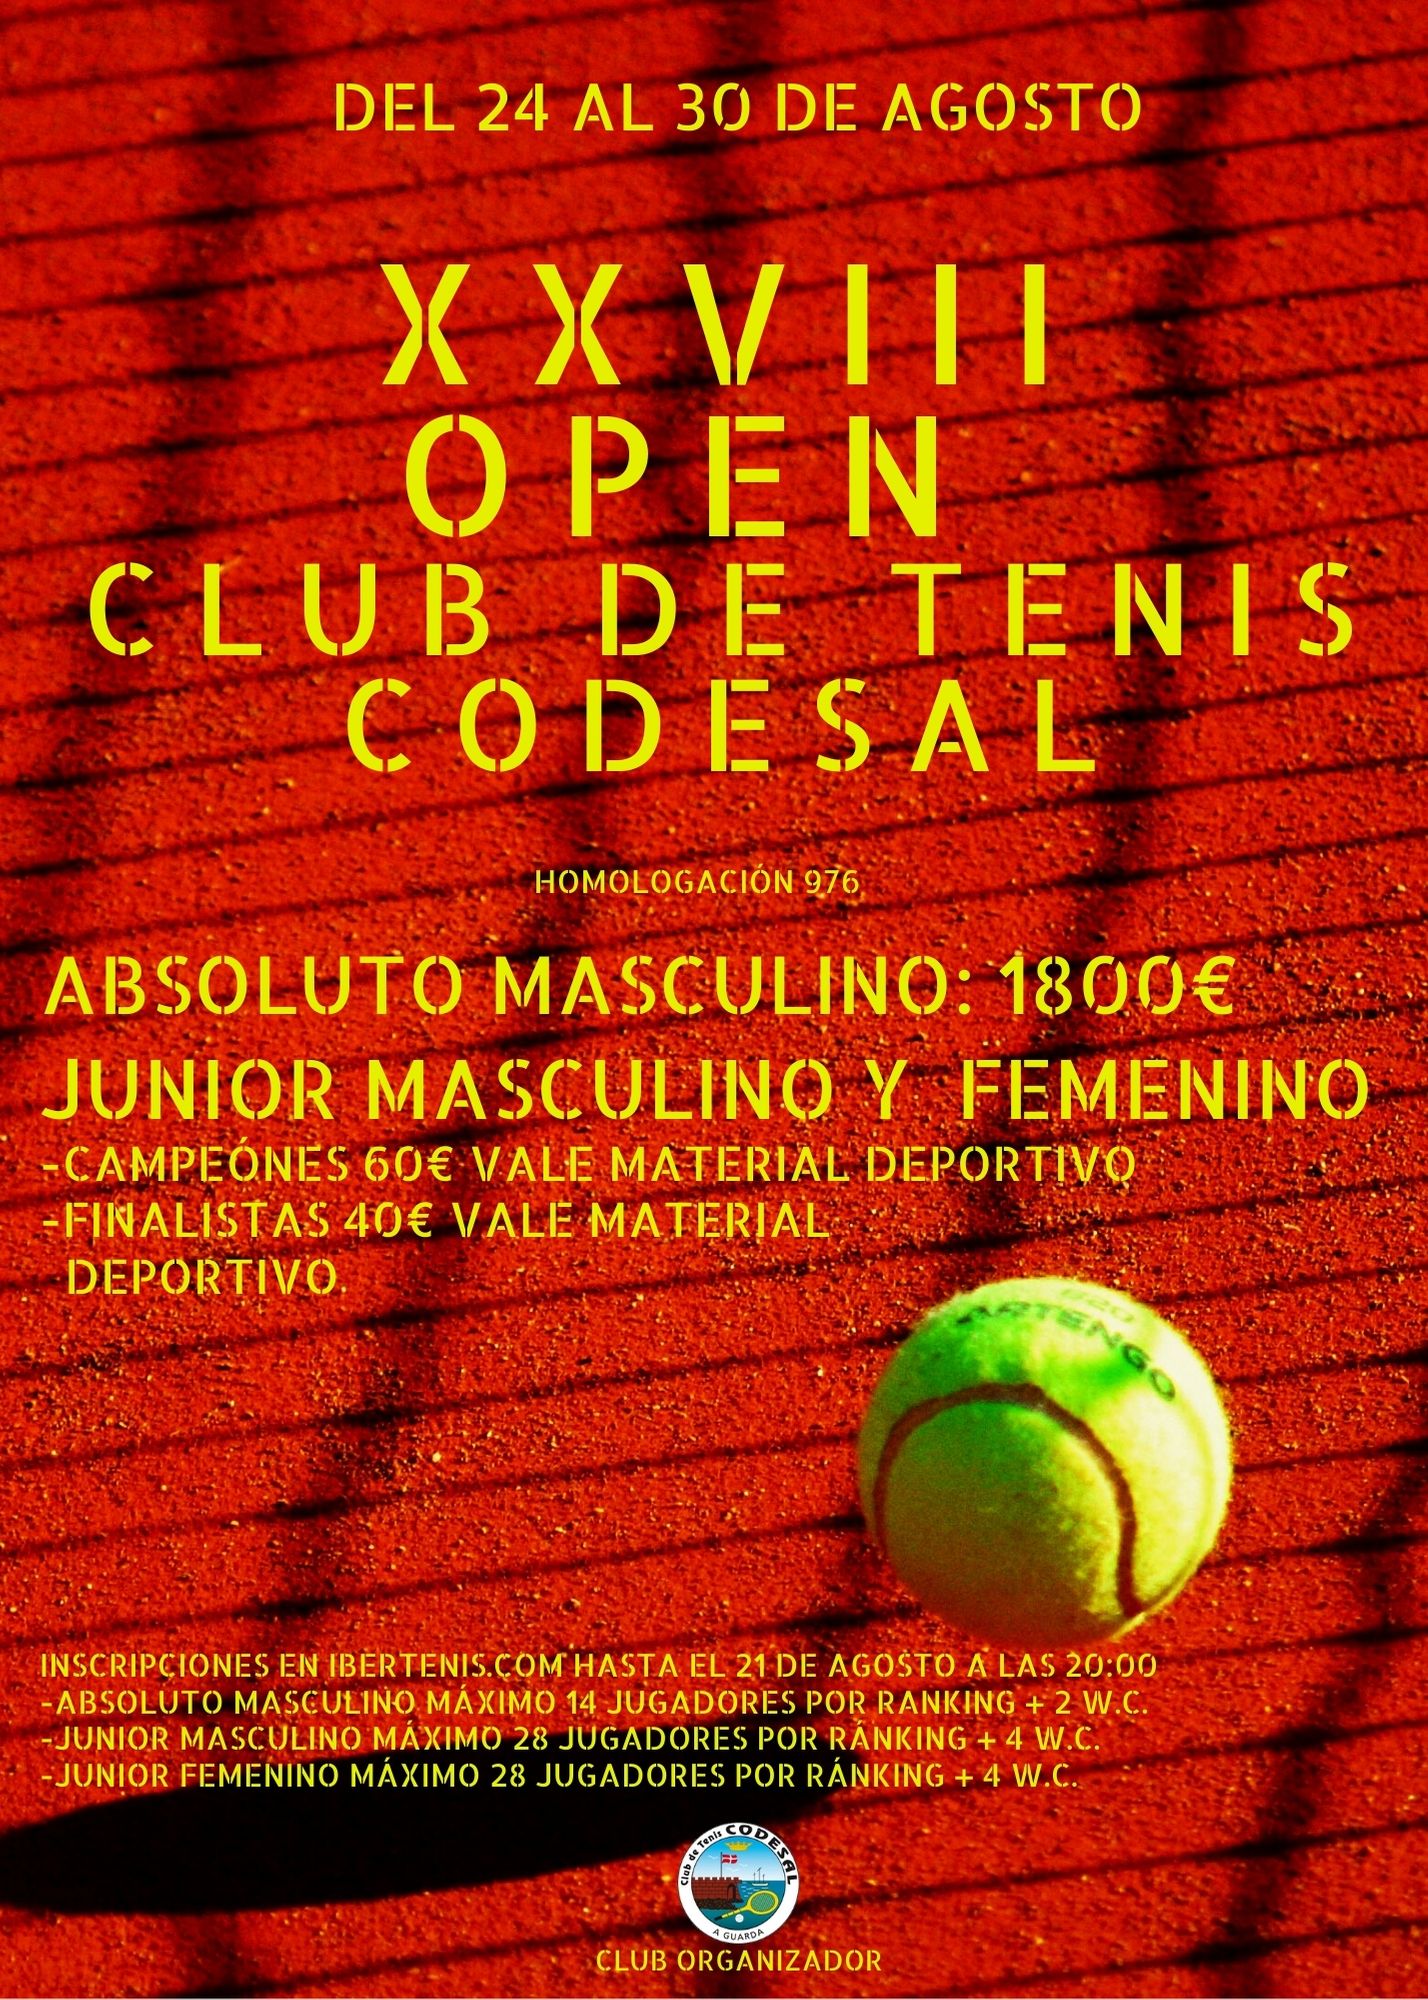 Cartel del XXVIII OPEN CLUB DE TENIS CODESAL (1800€ EN PREMIOS ABS.- JUNIOR MASC-FEM  MATERIAL DEPORTIVO)